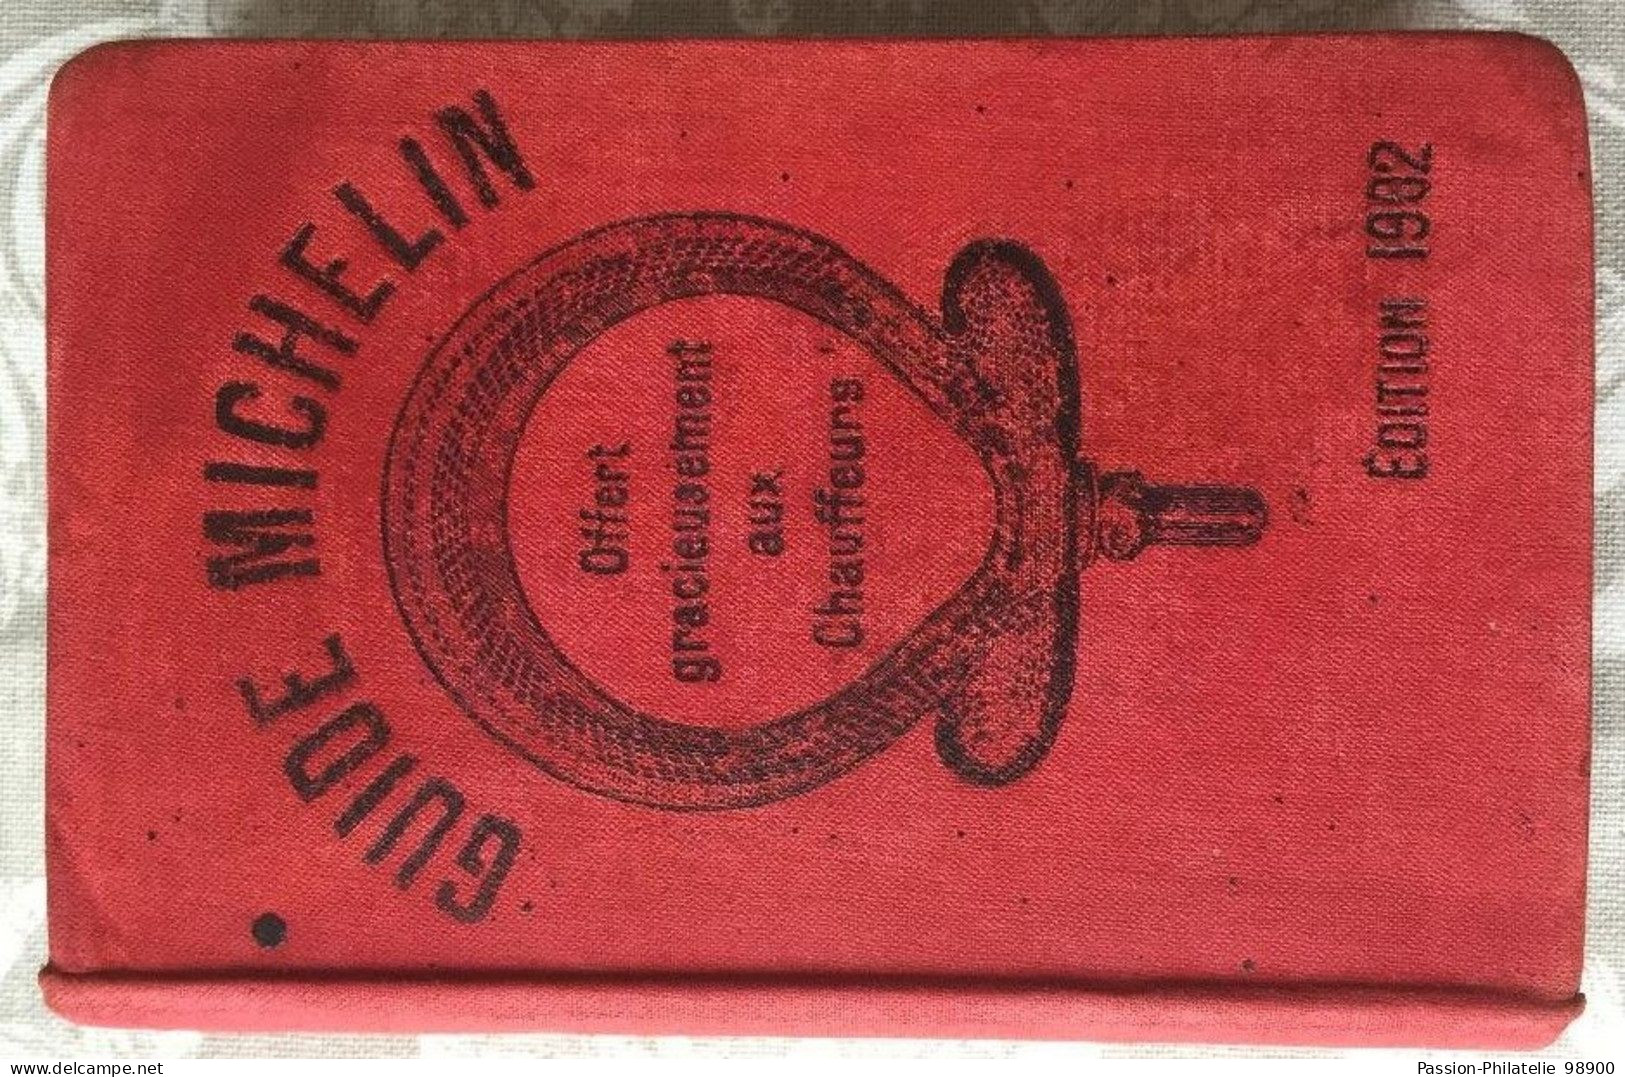 France Guide Michelin 1902 A - Michelin (guides)